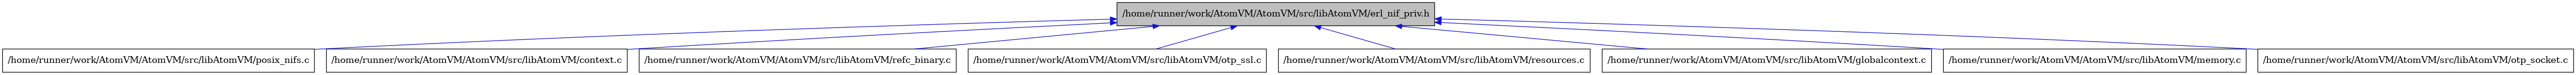 digraph {
    graph [bgcolor="#00000000"]
    node [shape=rectangle style=filled fillcolor="#FFFFFF" font=Helvetica padding=2]
    edge [color="#1414CE"]
    "7" [label="/home/runner/work/AtomVM/AtomVM/src/libAtomVM/posix_nifs.c" tooltip="/home/runner/work/AtomVM/AtomVM/src/libAtomVM/posix_nifs.c"]
    "2" [label="/home/runner/work/AtomVM/AtomVM/src/libAtomVM/context.c" tooltip="/home/runner/work/AtomVM/AtomVM/src/libAtomVM/context.c"]
    "8" [label="/home/runner/work/AtomVM/AtomVM/src/libAtomVM/refc_binary.c" tooltip="/home/runner/work/AtomVM/AtomVM/src/libAtomVM/refc_binary.c"]
    "6" [label="/home/runner/work/AtomVM/AtomVM/src/libAtomVM/otp_ssl.c" tooltip="/home/runner/work/AtomVM/AtomVM/src/libAtomVM/otp_ssl.c"]
    "9" [label="/home/runner/work/AtomVM/AtomVM/src/libAtomVM/resources.c" tooltip="/home/runner/work/AtomVM/AtomVM/src/libAtomVM/resources.c"]
    "1" [label="/home/runner/work/AtomVM/AtomVM/src/libAtomVM/erl_nif_priv.h" tooltip="/home/runner/work/AtomVM/AtomVM/src/libAtomVM/erl_nif_priv.h" fillcolor="#BFBFBF"]
    "3" [label="/home/runner/work/AtomVM/AtomVM/src/libAtomVM/globalcontext.c" tooltip="/home/runner/work/AtomVM/AtomVM/src/libAtomVM/globalcontext.c"]
    "4" [label="/home/runner/work/AtomVM/AtomVM/src/libAtomVM/memory.c" tooltip="/home/runner/work/AtomVM/AtomVM/src/libAtomVM/memory.c"]
    "5" [label="/home/runner/work/AtomVM/AtomVM/src/libAtomVM/otp_socket.c" tooltip="/home/runner/work/AtomVM/AtomVM/src/libAtomVM/otp_socket.c"]
    "1" -> "2" [dir=back tooltip="include"]
    "1" -> "3" [dir=back tooltip="include"]
    "1" -> "4" [dir=back tooltip="include"]
    "1" -> "5" [dir=back tooltip="include"]
    "1" -> "6" [dir=back tooltip="include"]
    "1" -> "7" [dir=back tooltip="include"]
    "1" -> "8" [dir=back tooltip="include"]
    "1" -> "9" [dir=back tooltip="include"]
}